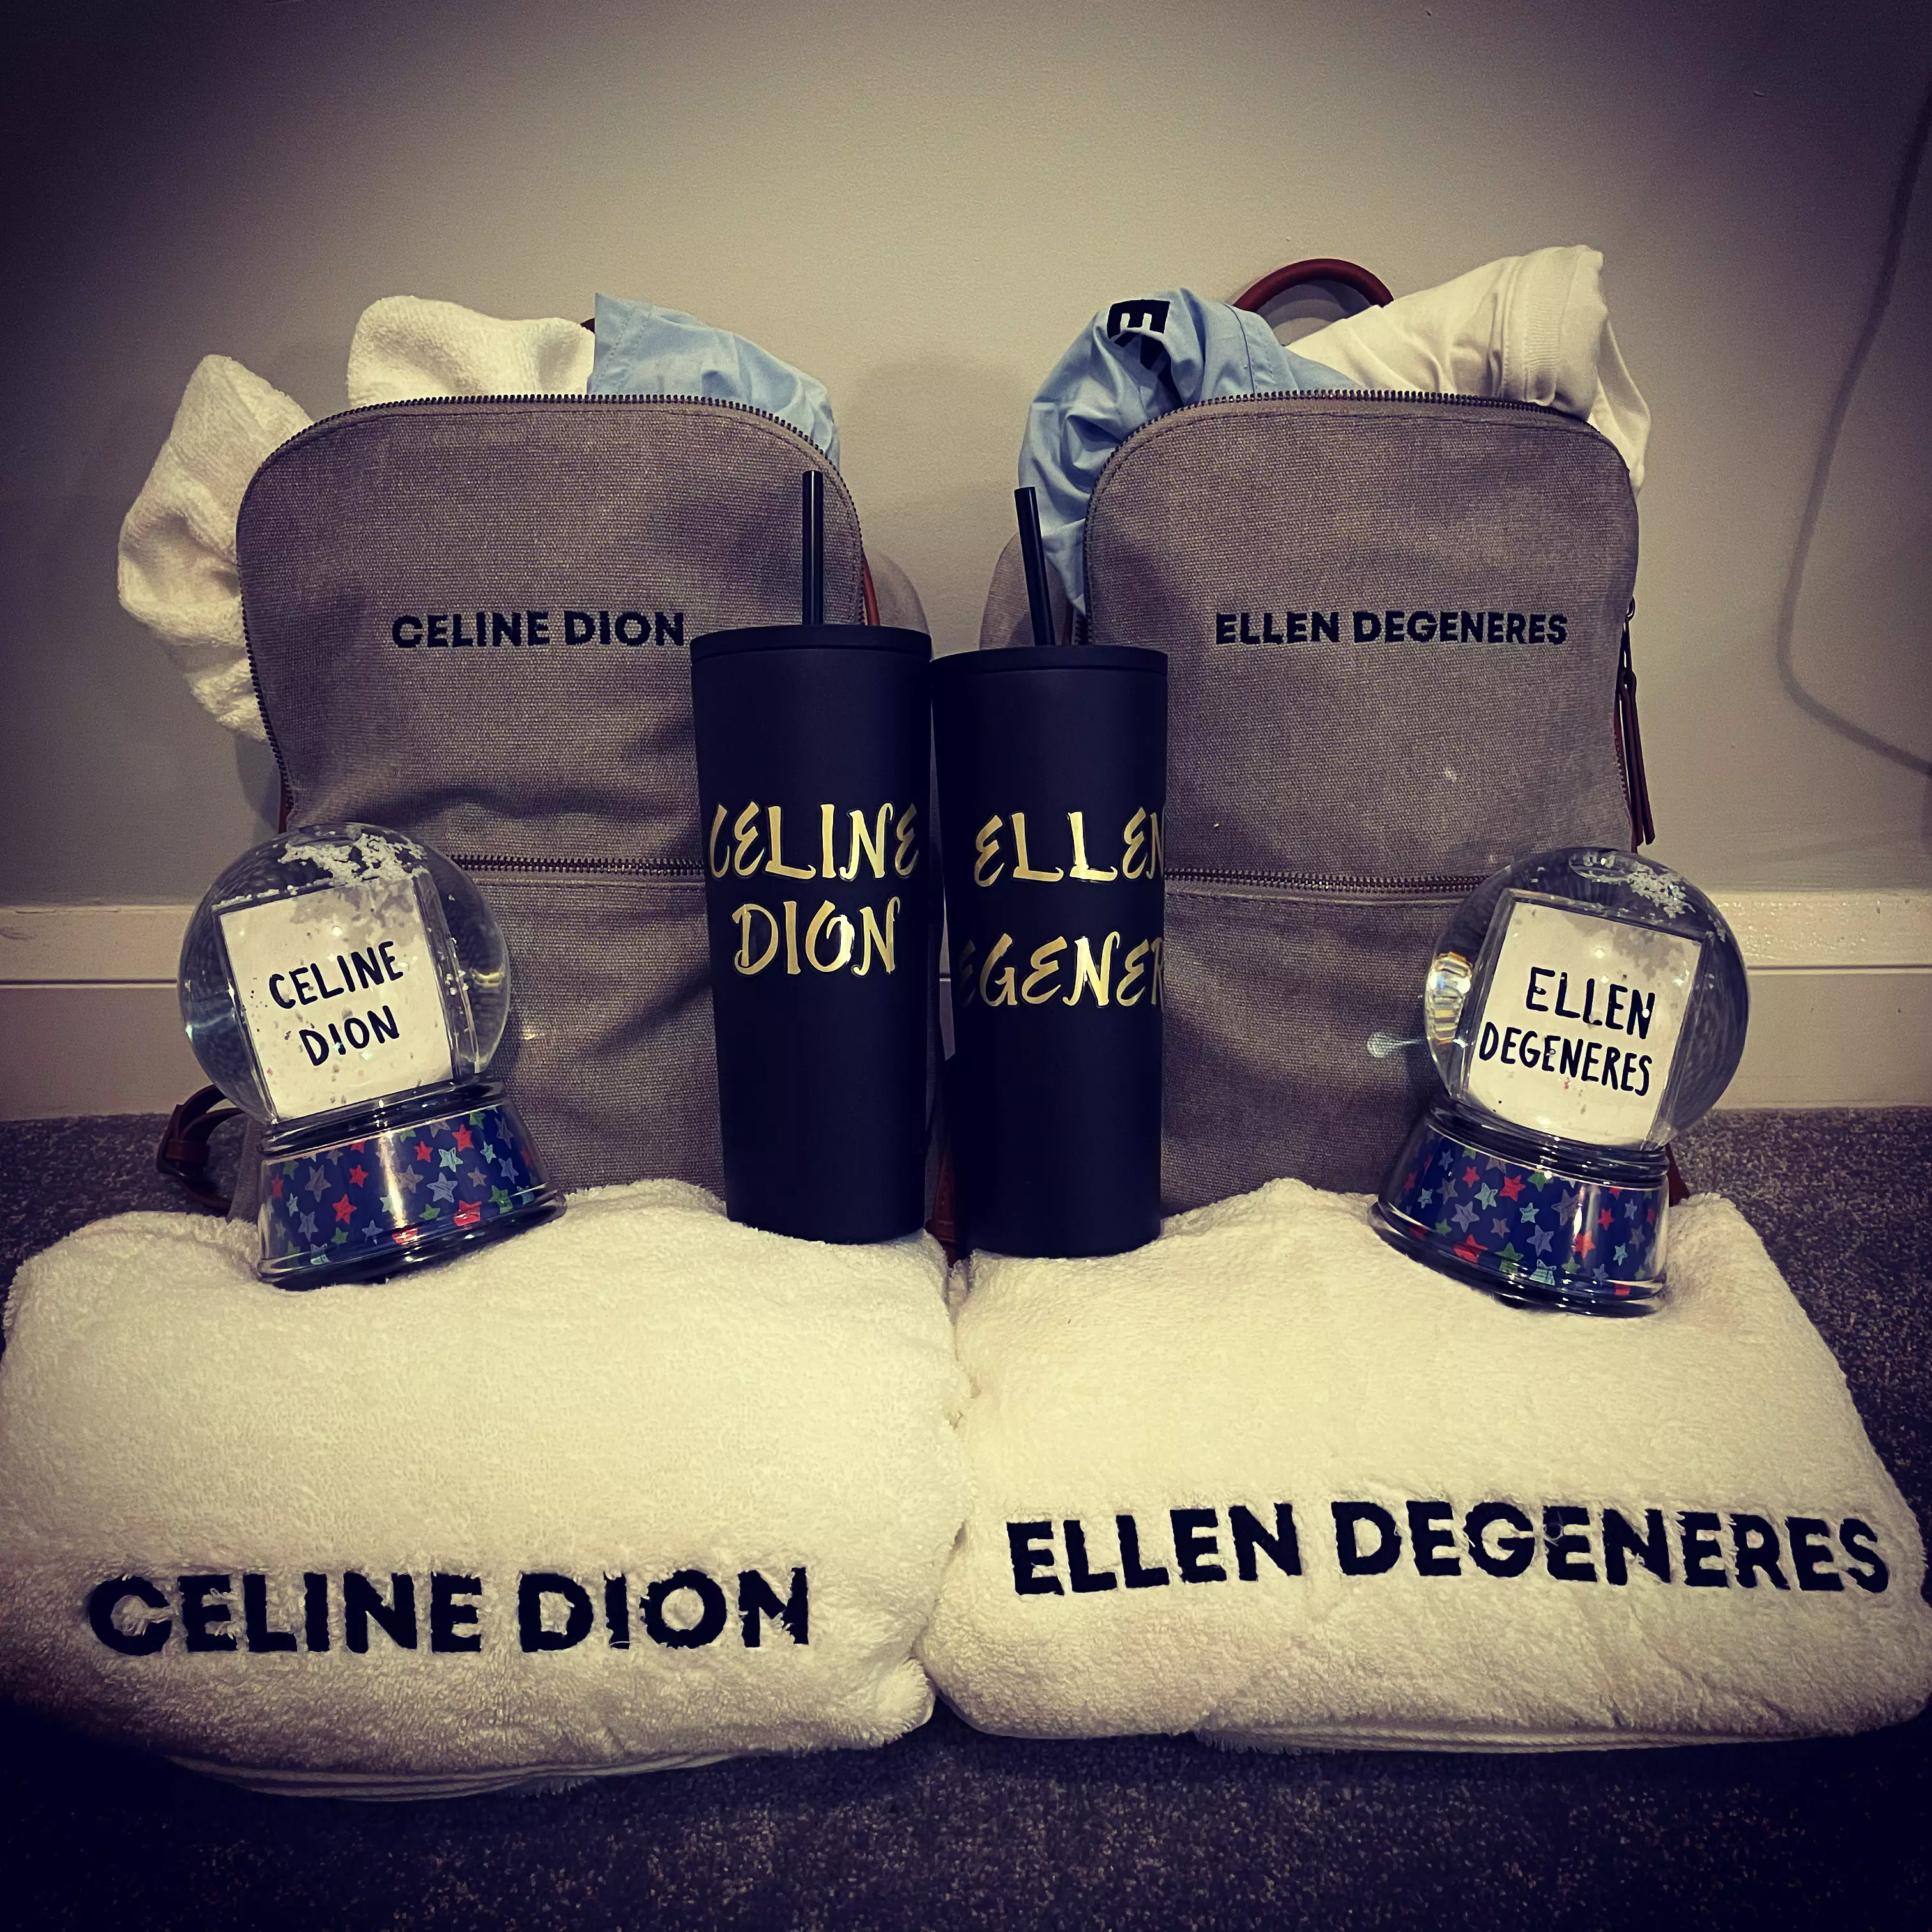 Celine was given $10,000 by Ellen DeGeneres.